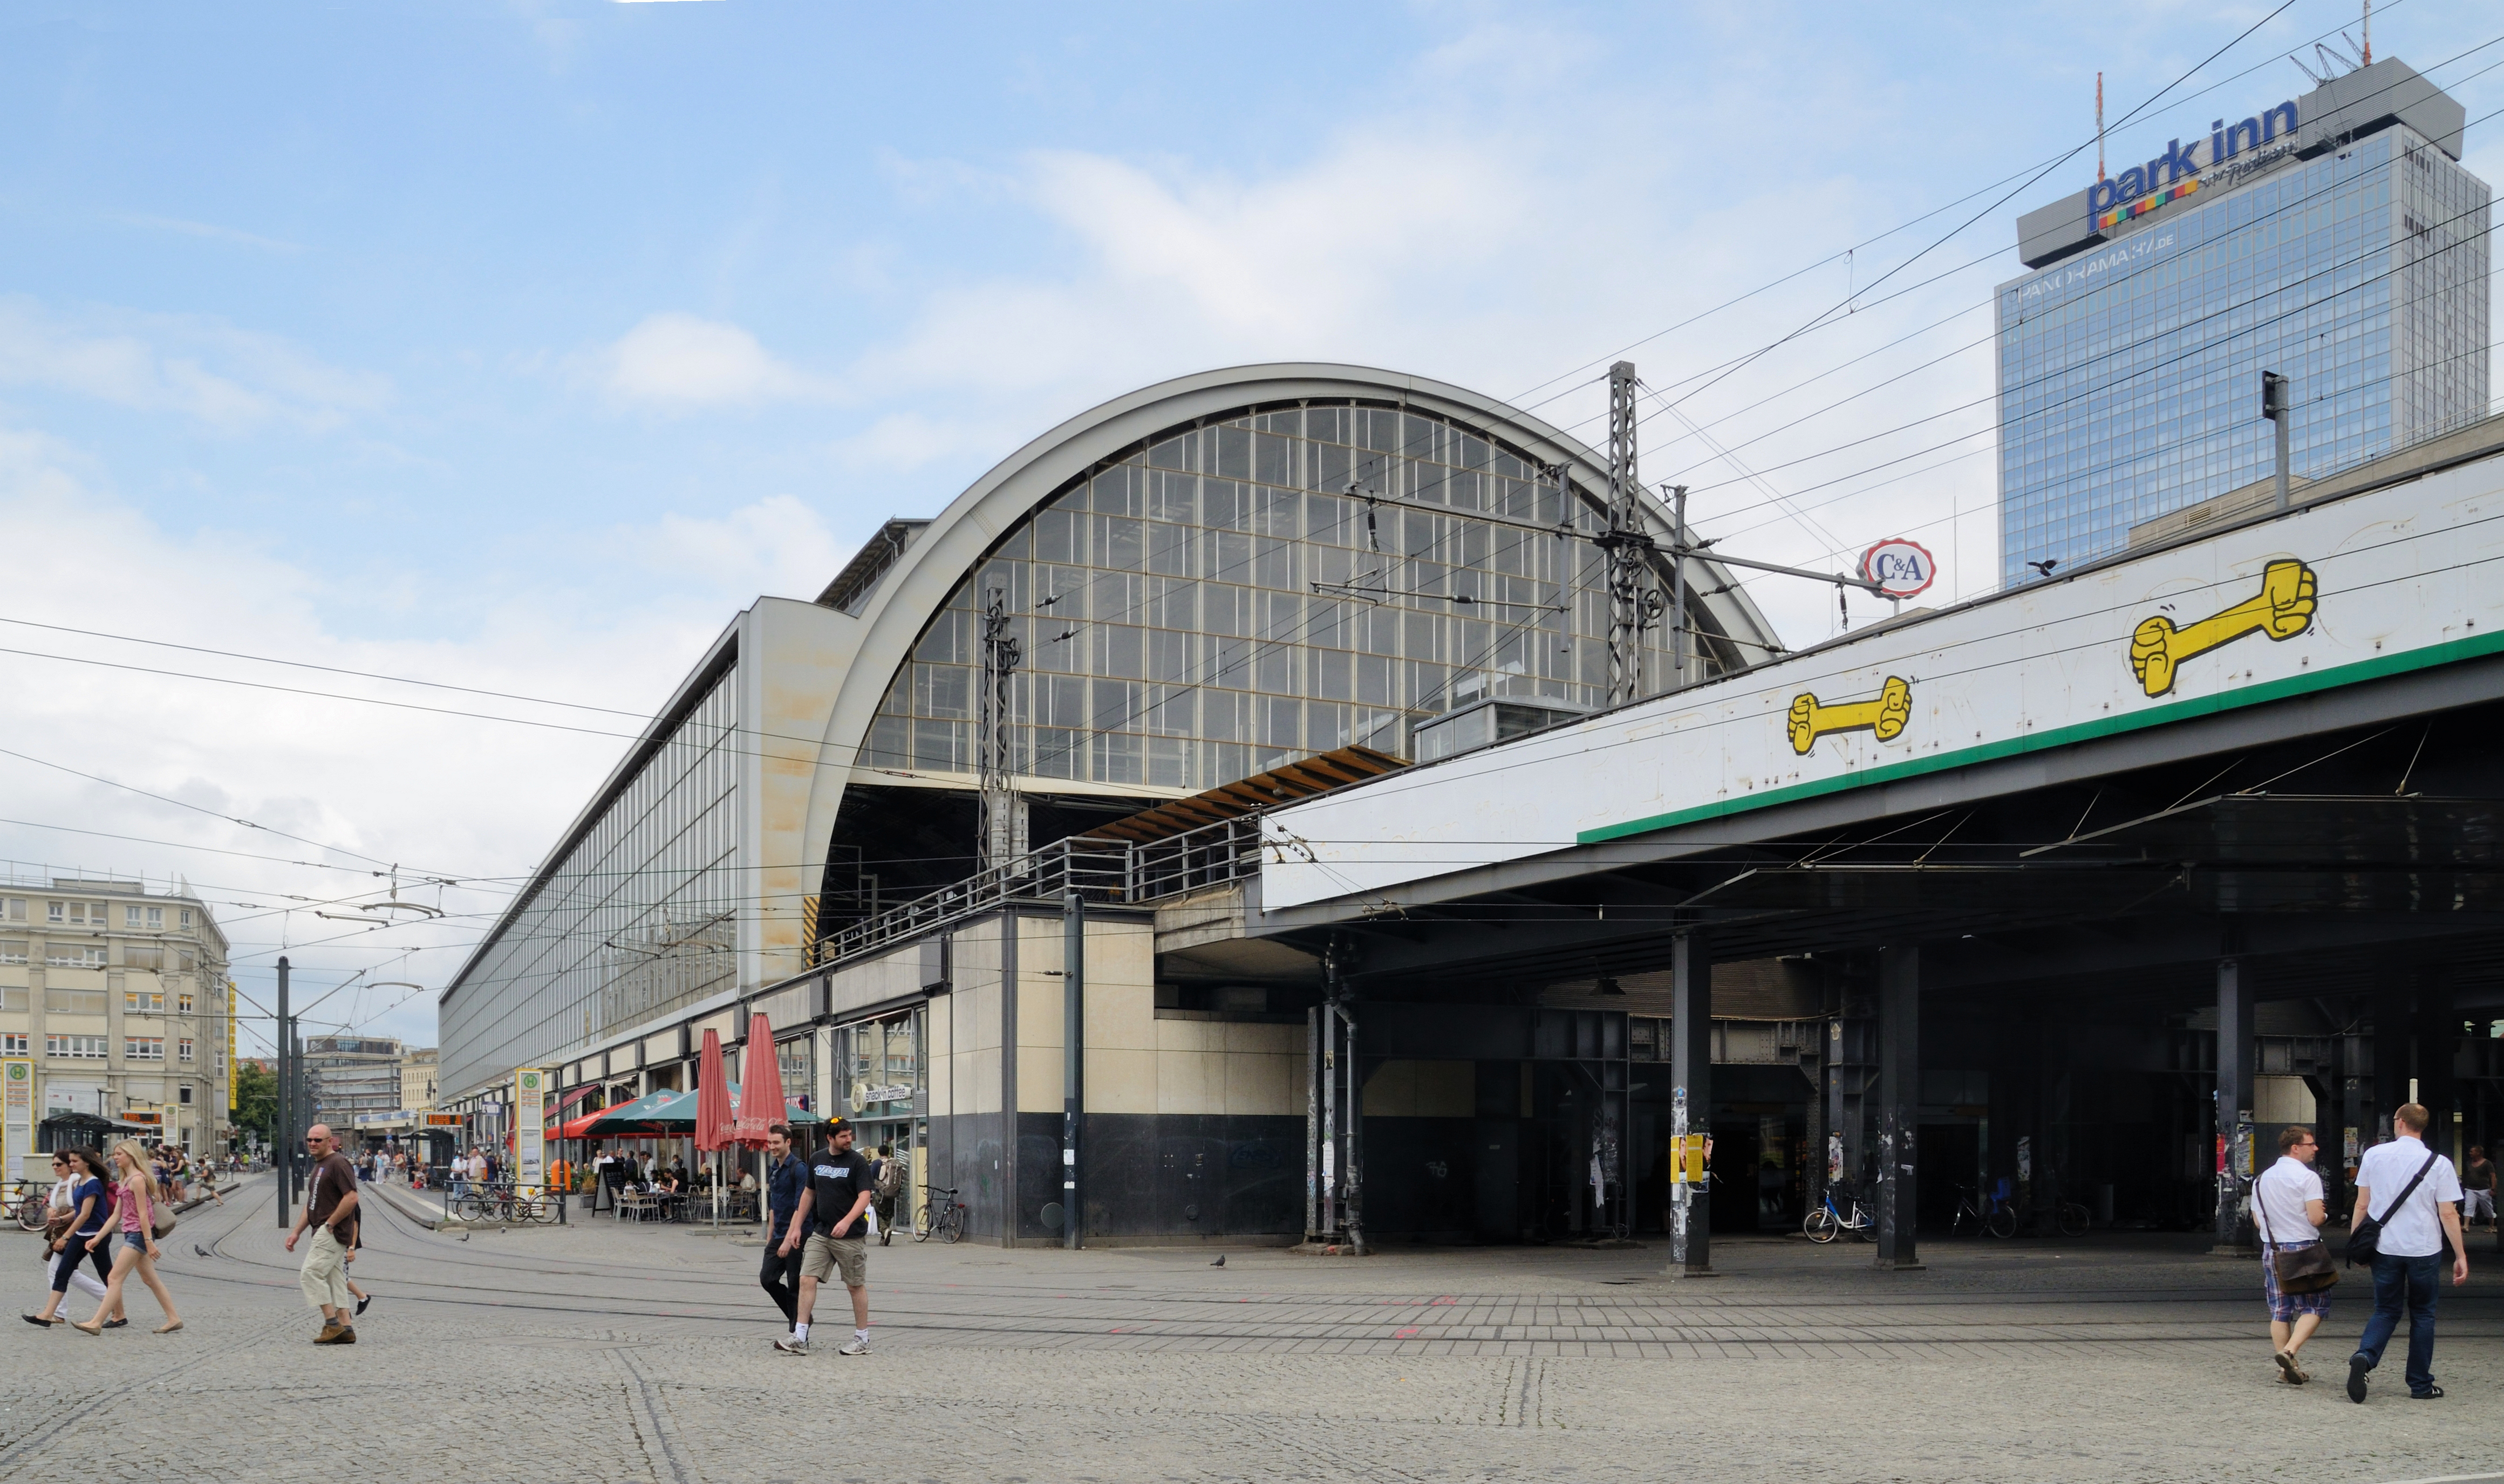 Berlin - Bahnhof Alexanderplatz